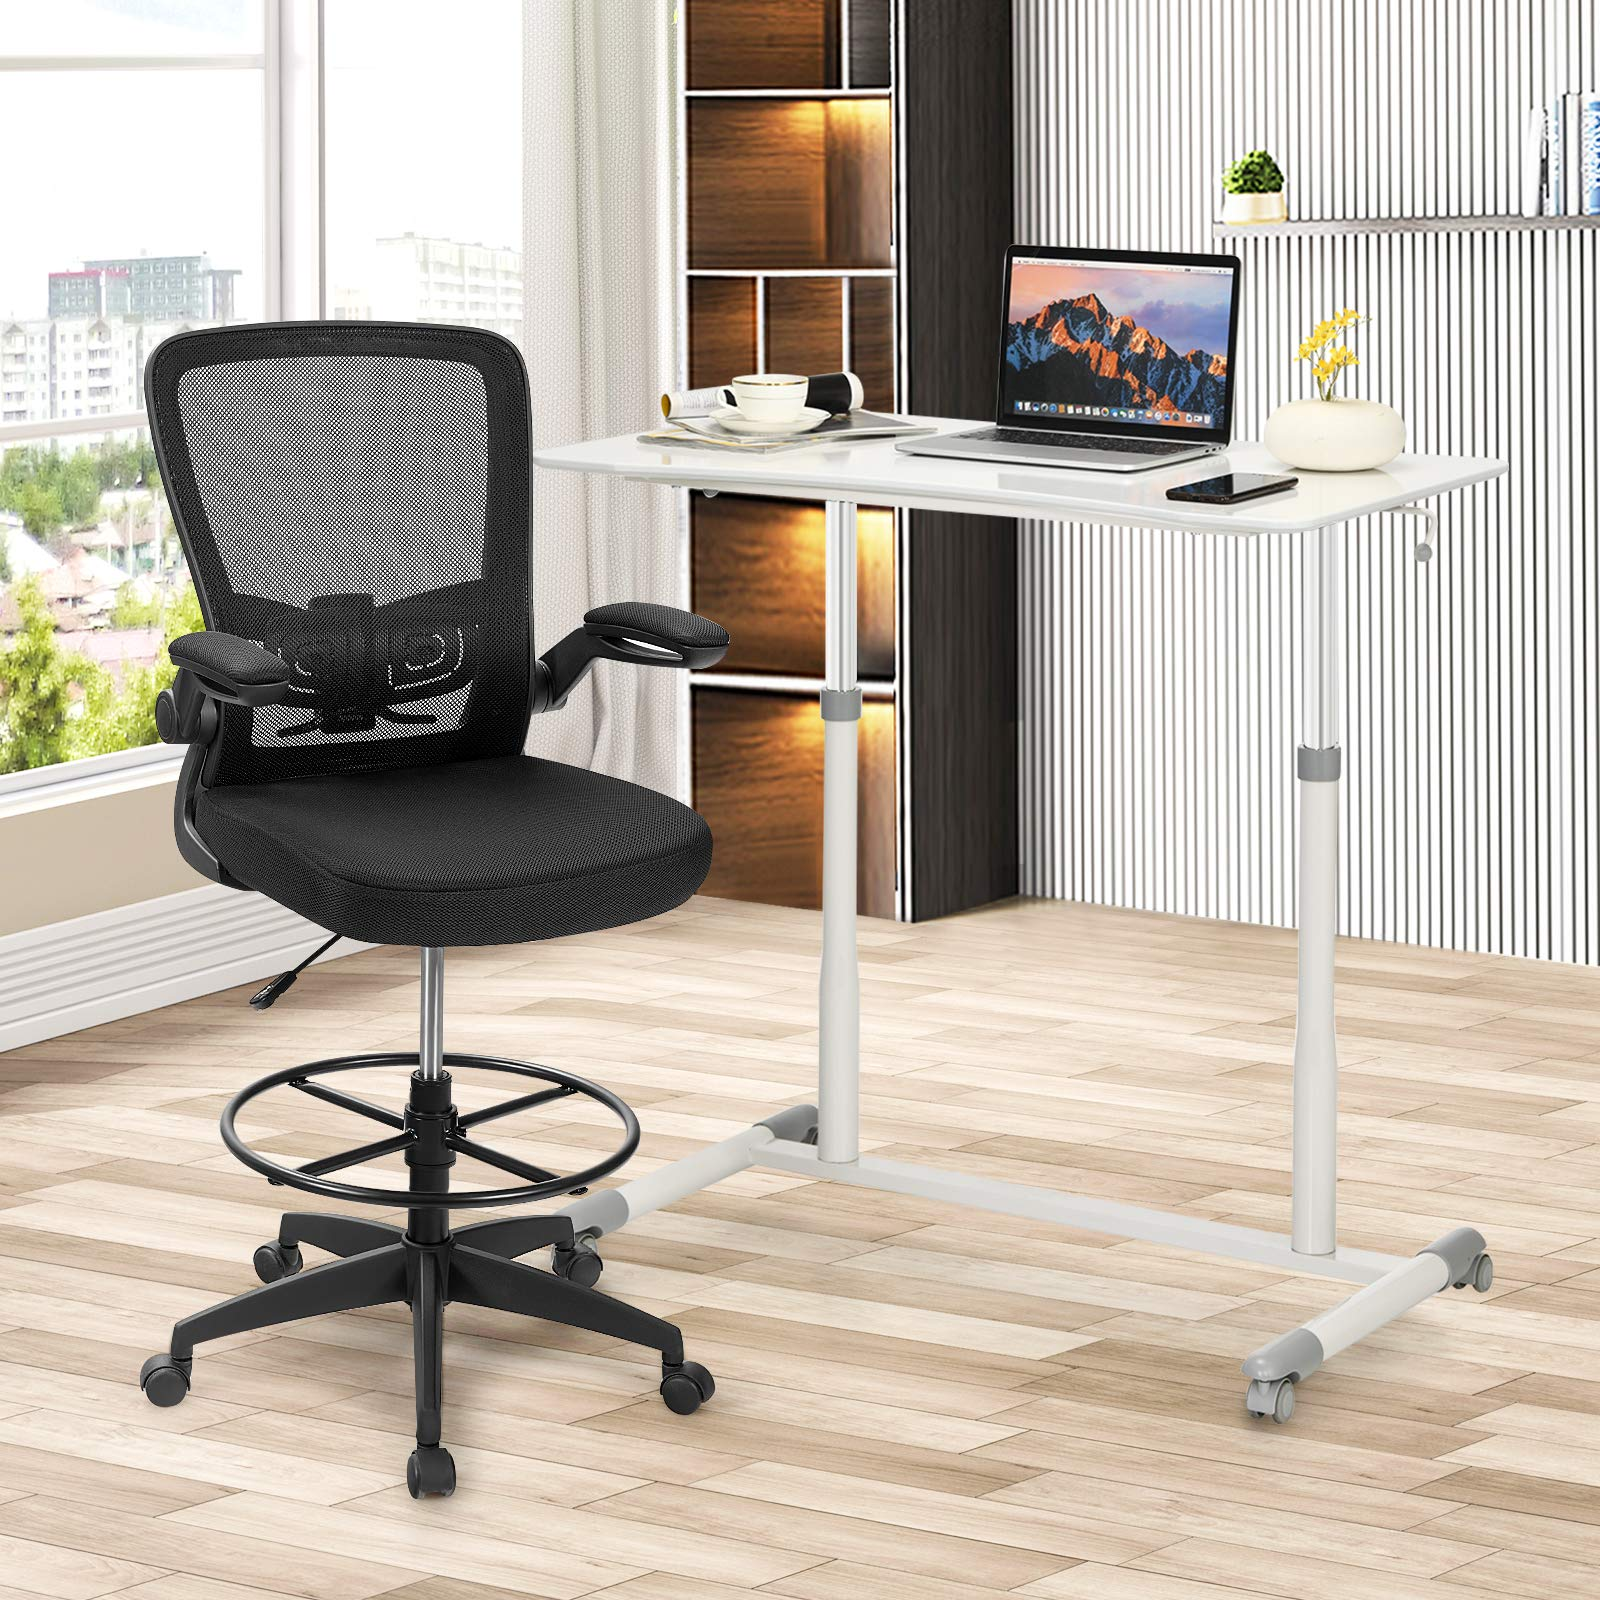 Tangkula Mobile Standing Desk Computer Desk, Height Adjustable Stand Up Desk with 4 Wheels